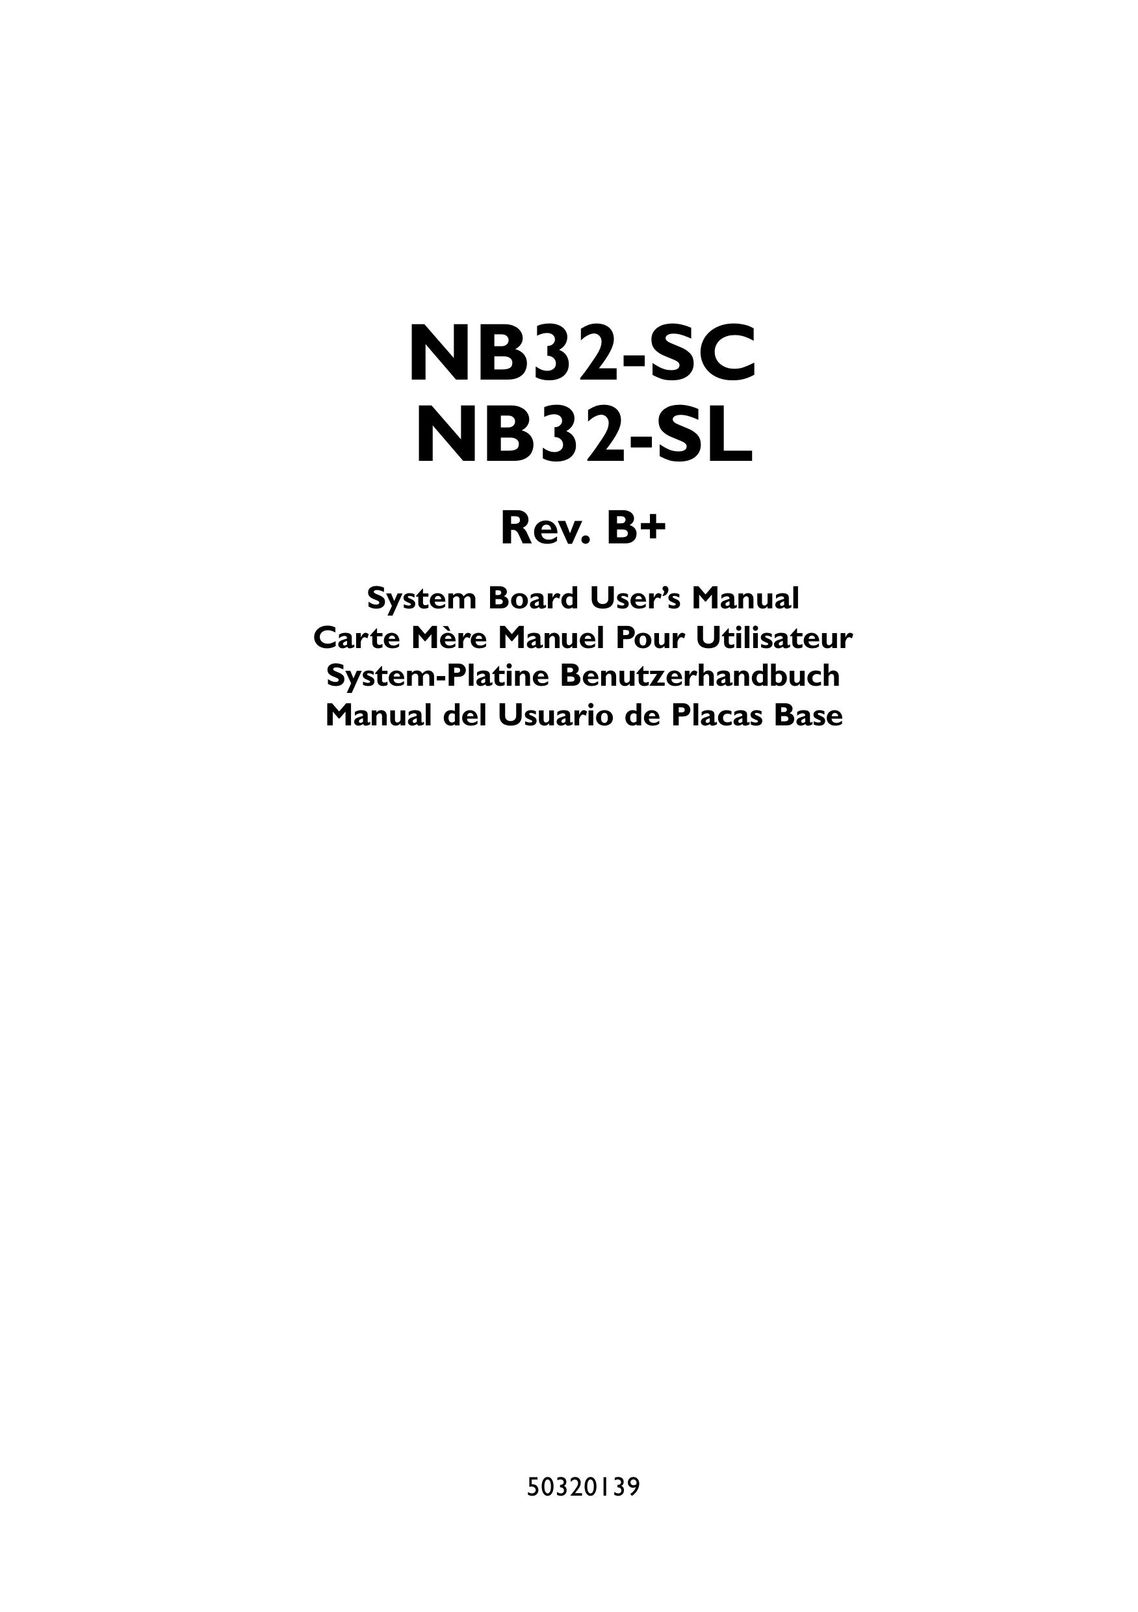 DFI NB32-SC Computer Hardware User Manual